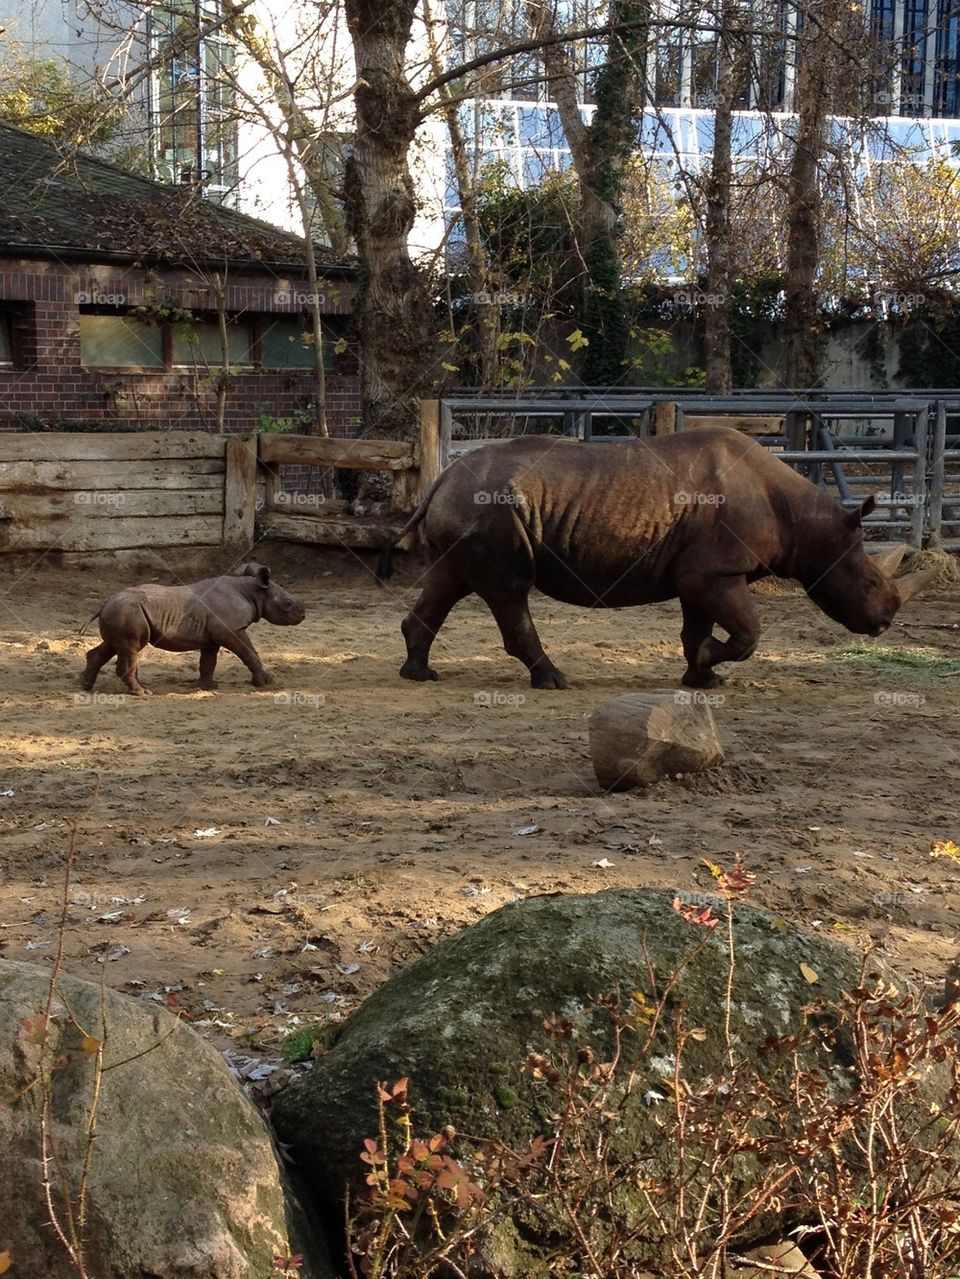 Mom and baby rhino